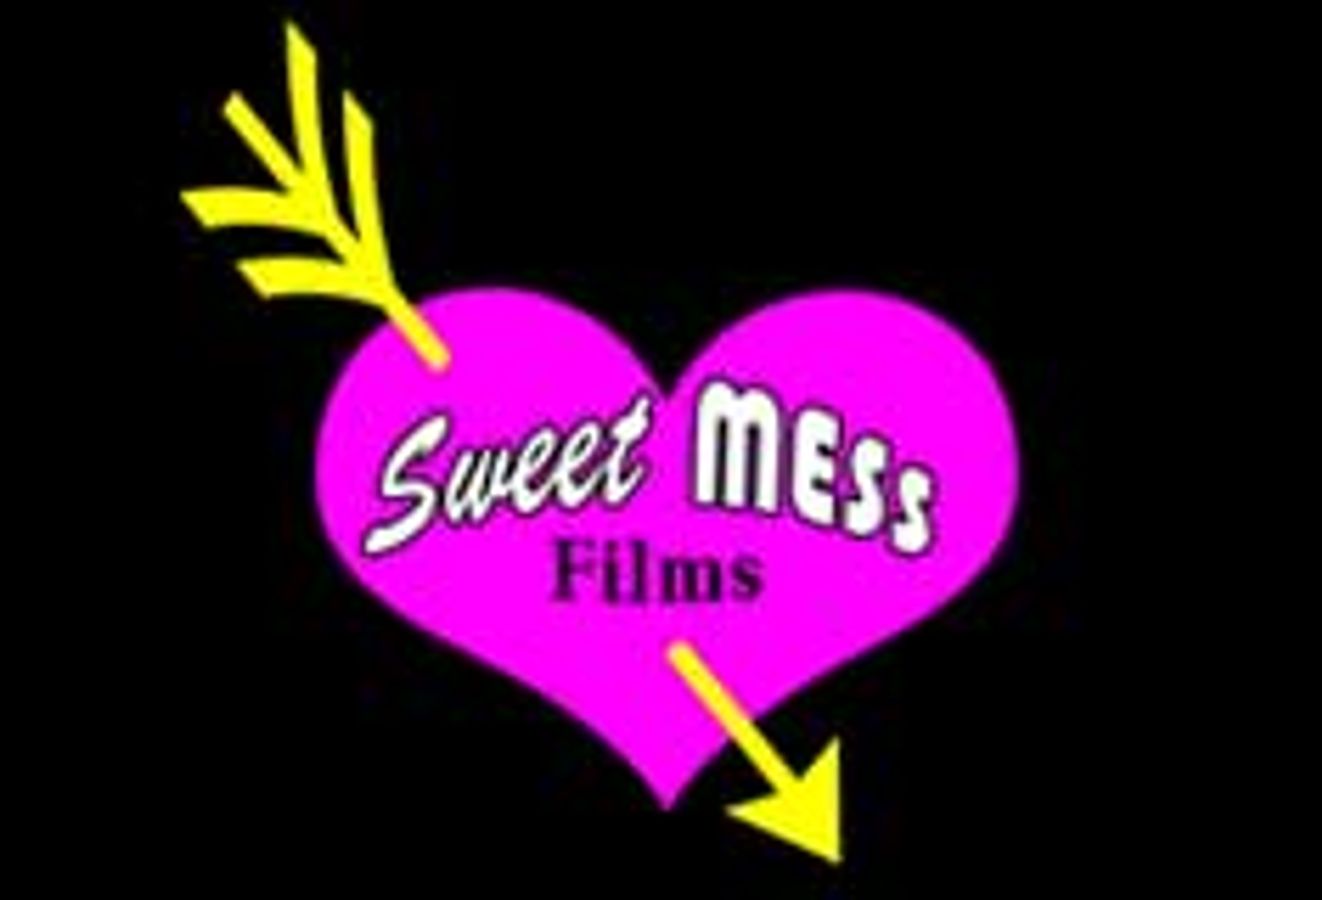 Sweet Mess Films